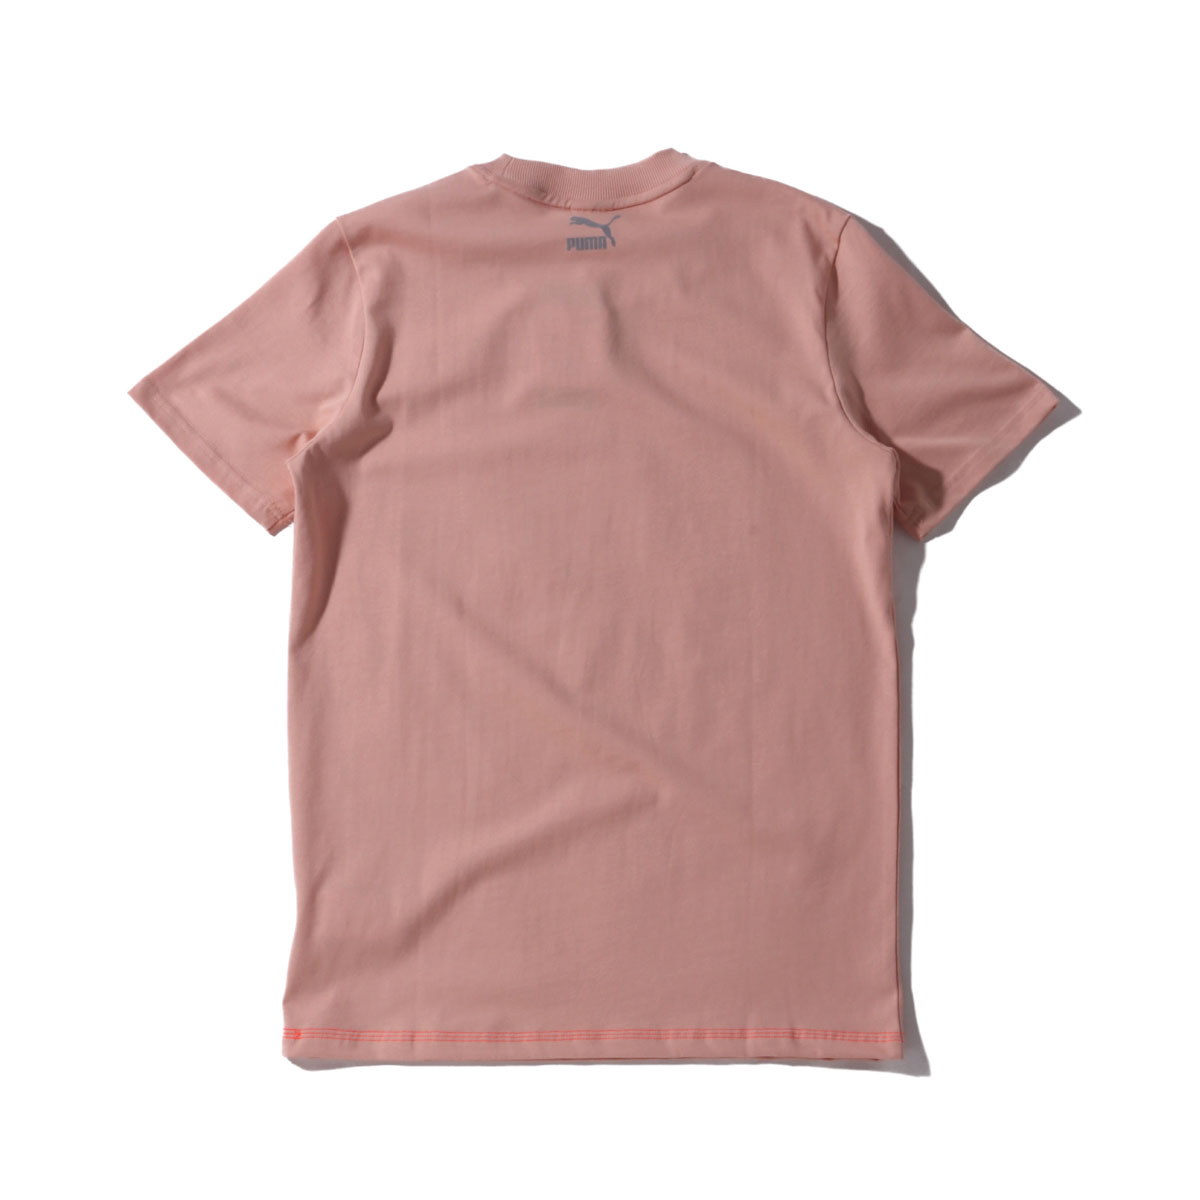 pink puma shirt